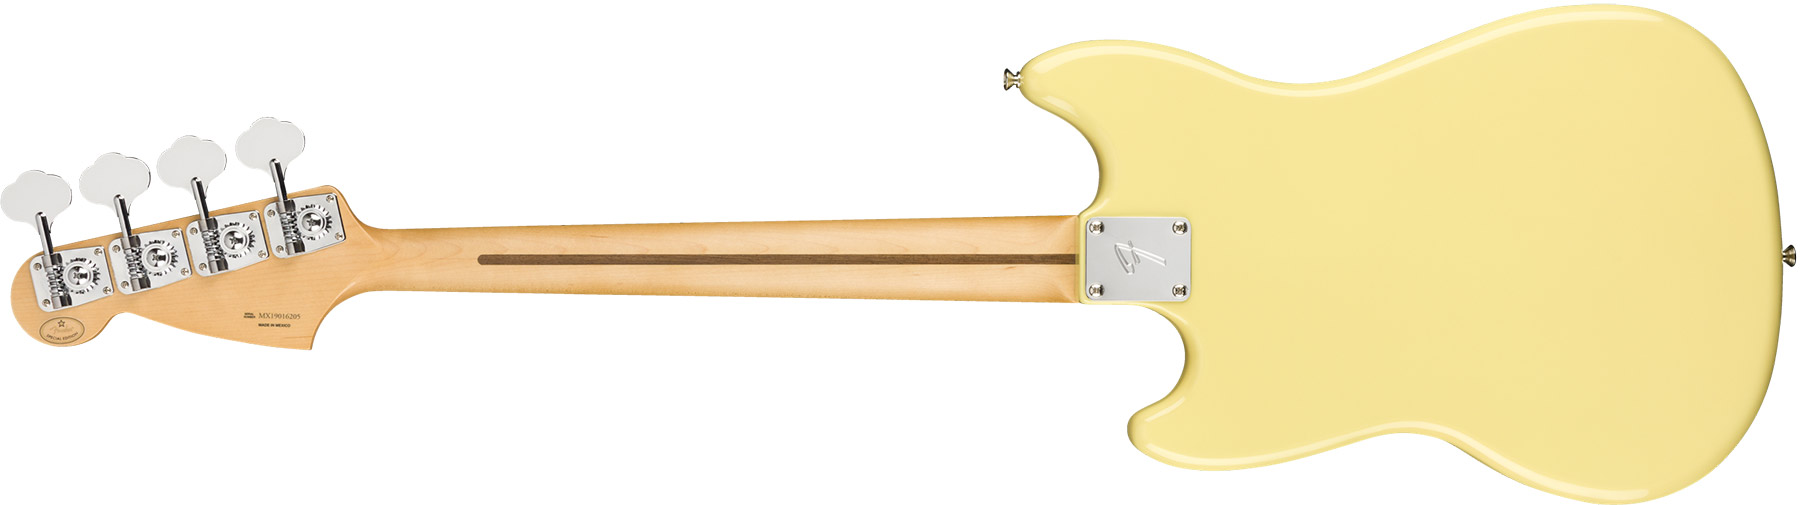 Fender Player Mustang Bass Pj Ltd Mex Mn - Canary - Solidbody E-bass - Variation 1